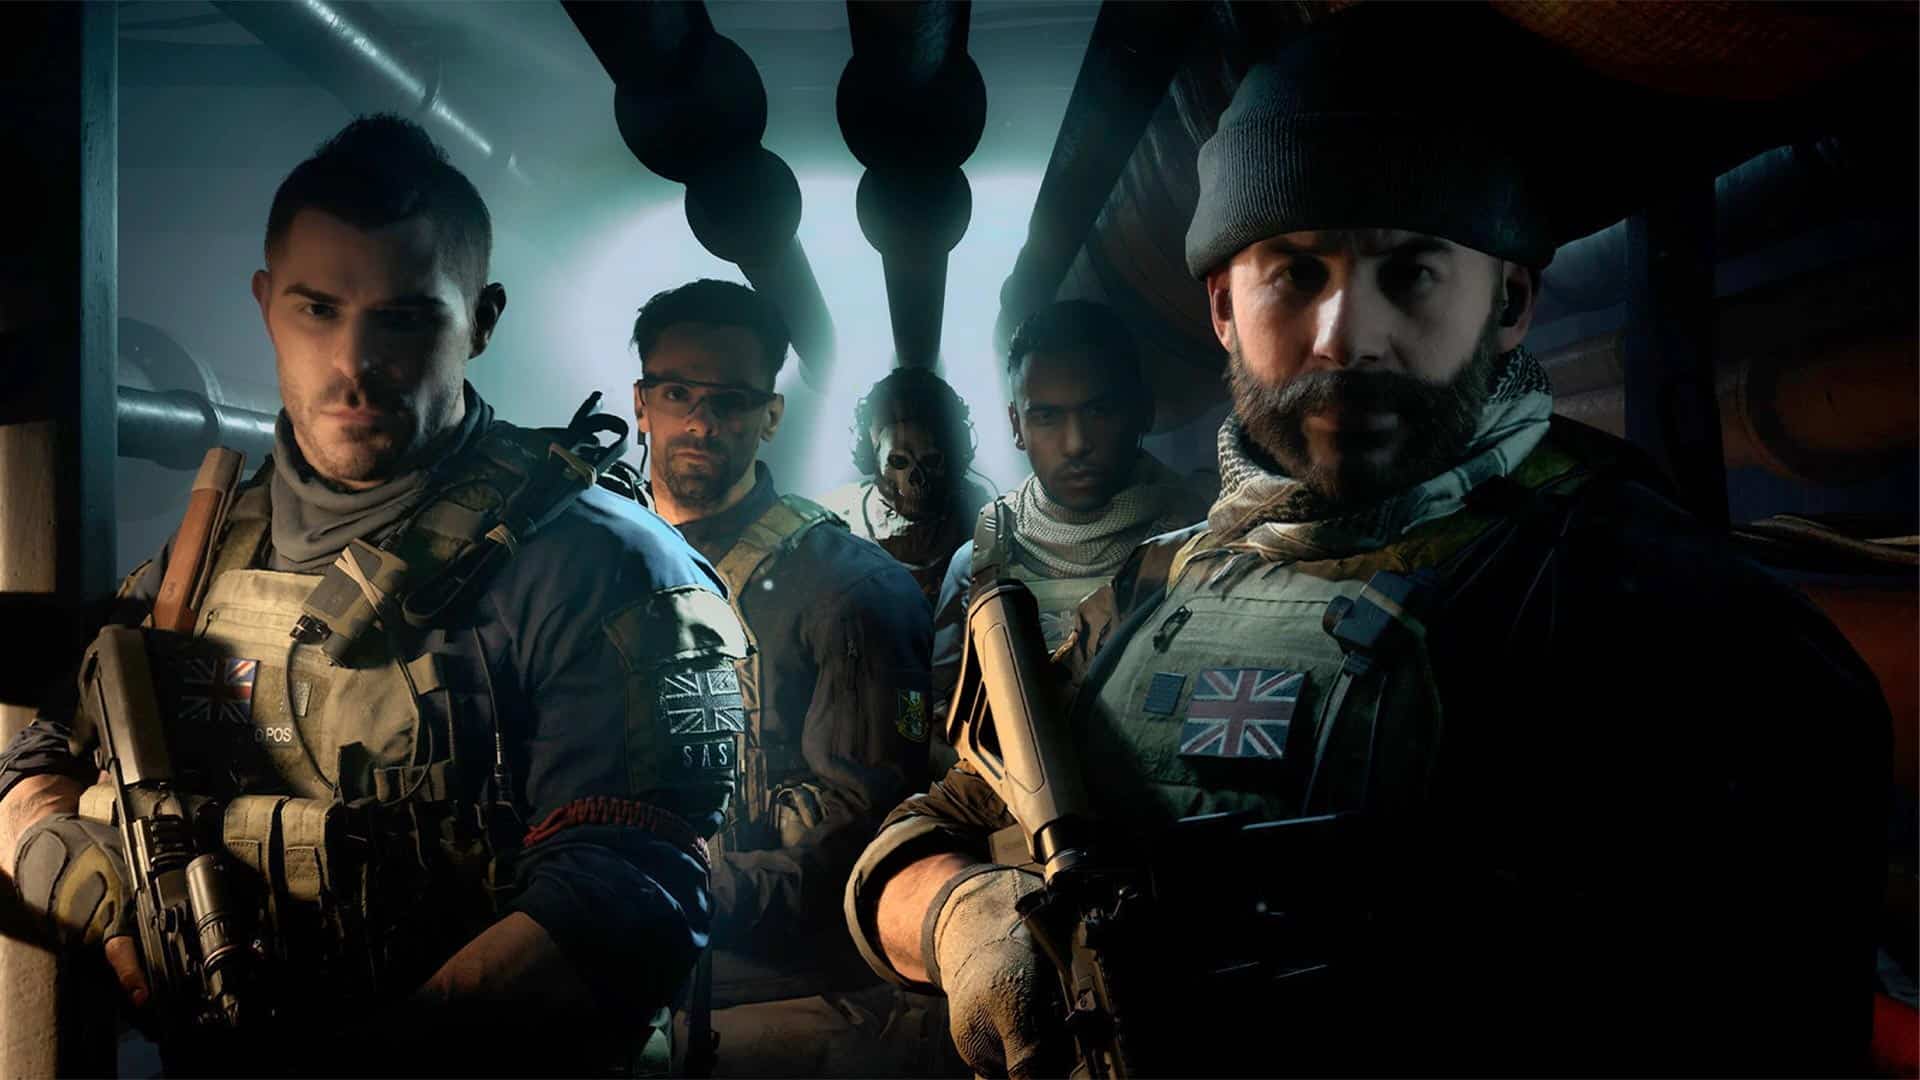 MODERN WARFARE 2 GAMEPLAY HAS BEEN SEEN (Call of Duty 2022) 